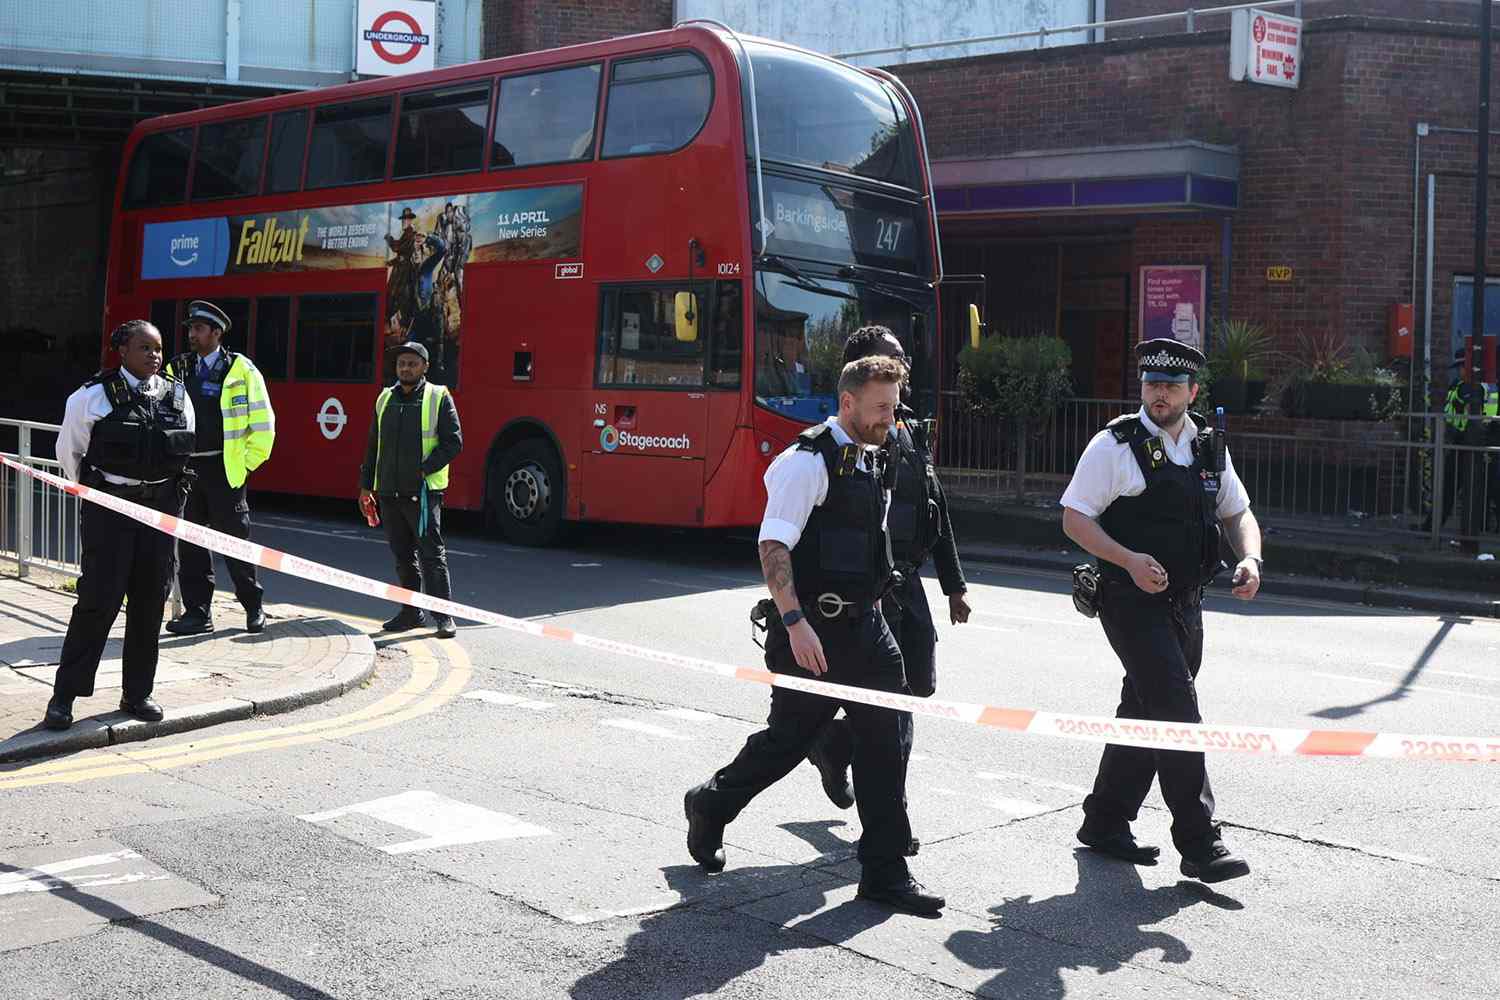 Sword-Wielding Man Attacks Passersby in London, Killing 14-Year-Old Boy, Injuring 4 People